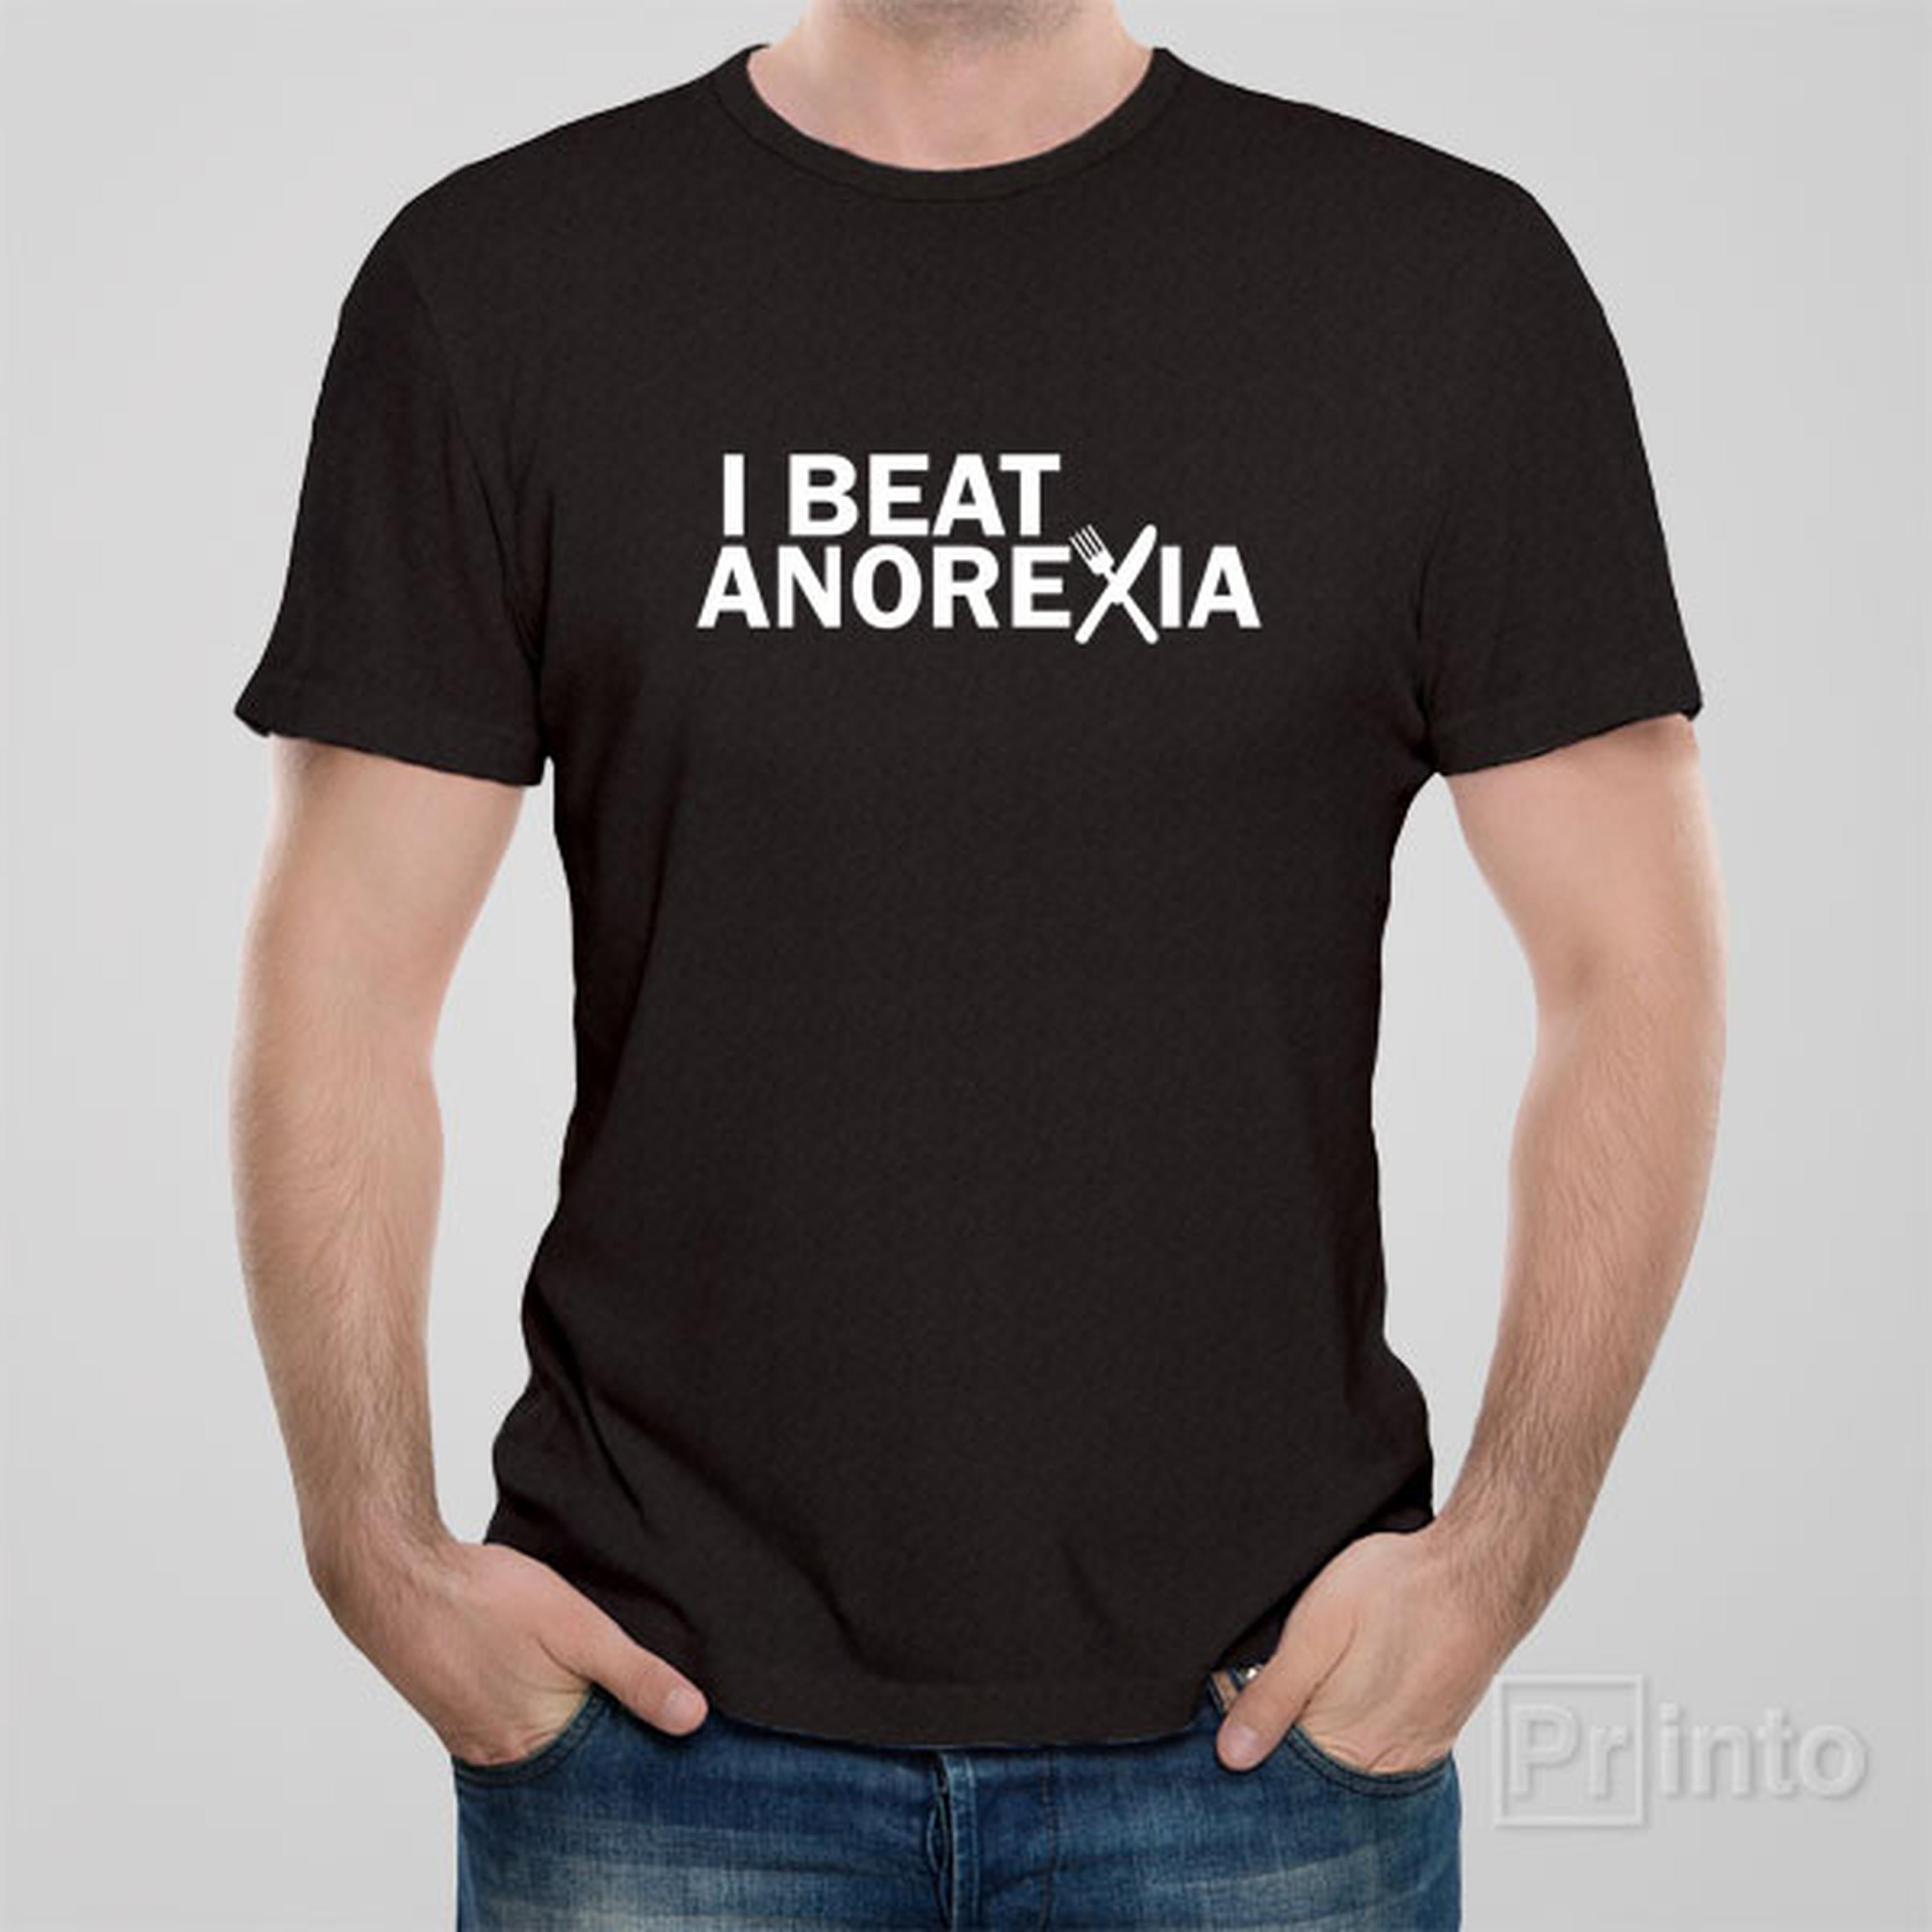 i-beat-anorexia-t-shirt